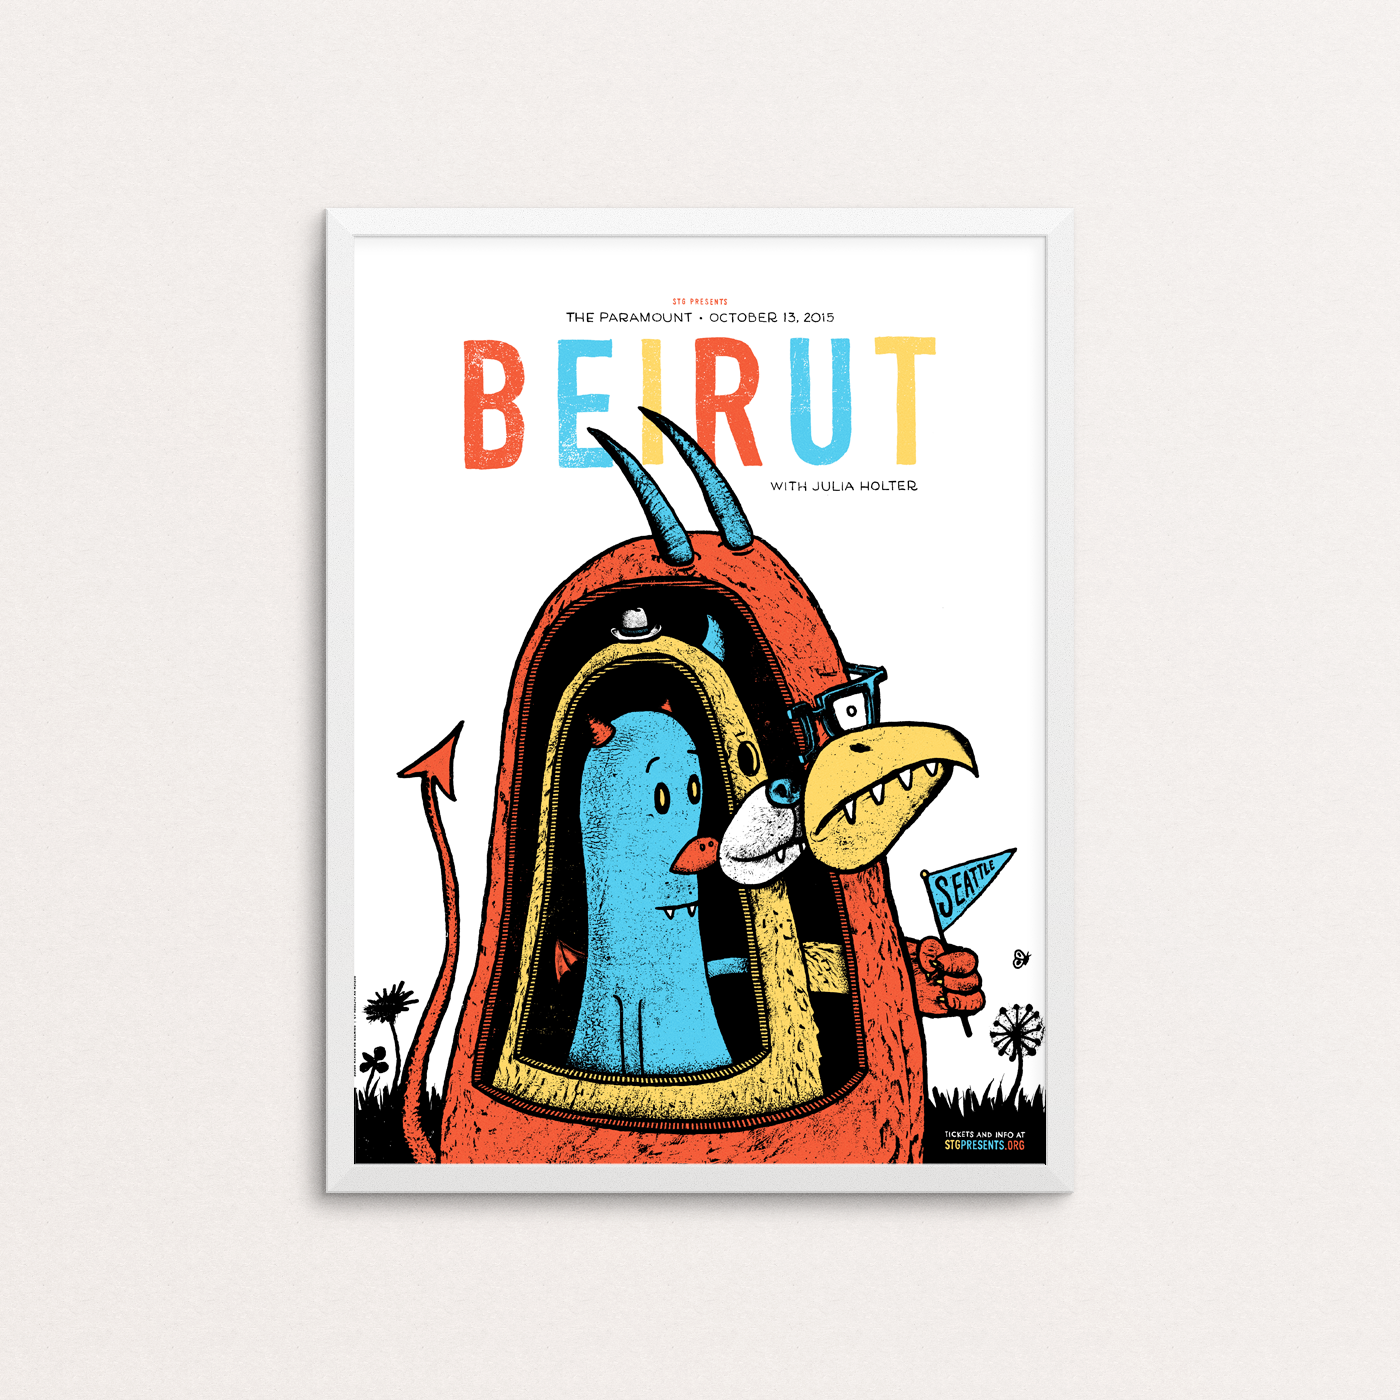 Beirut Poster